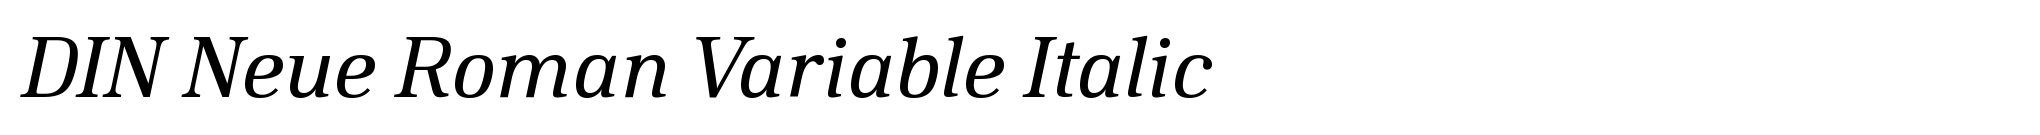 DIN Neue Roman Variable Italic image